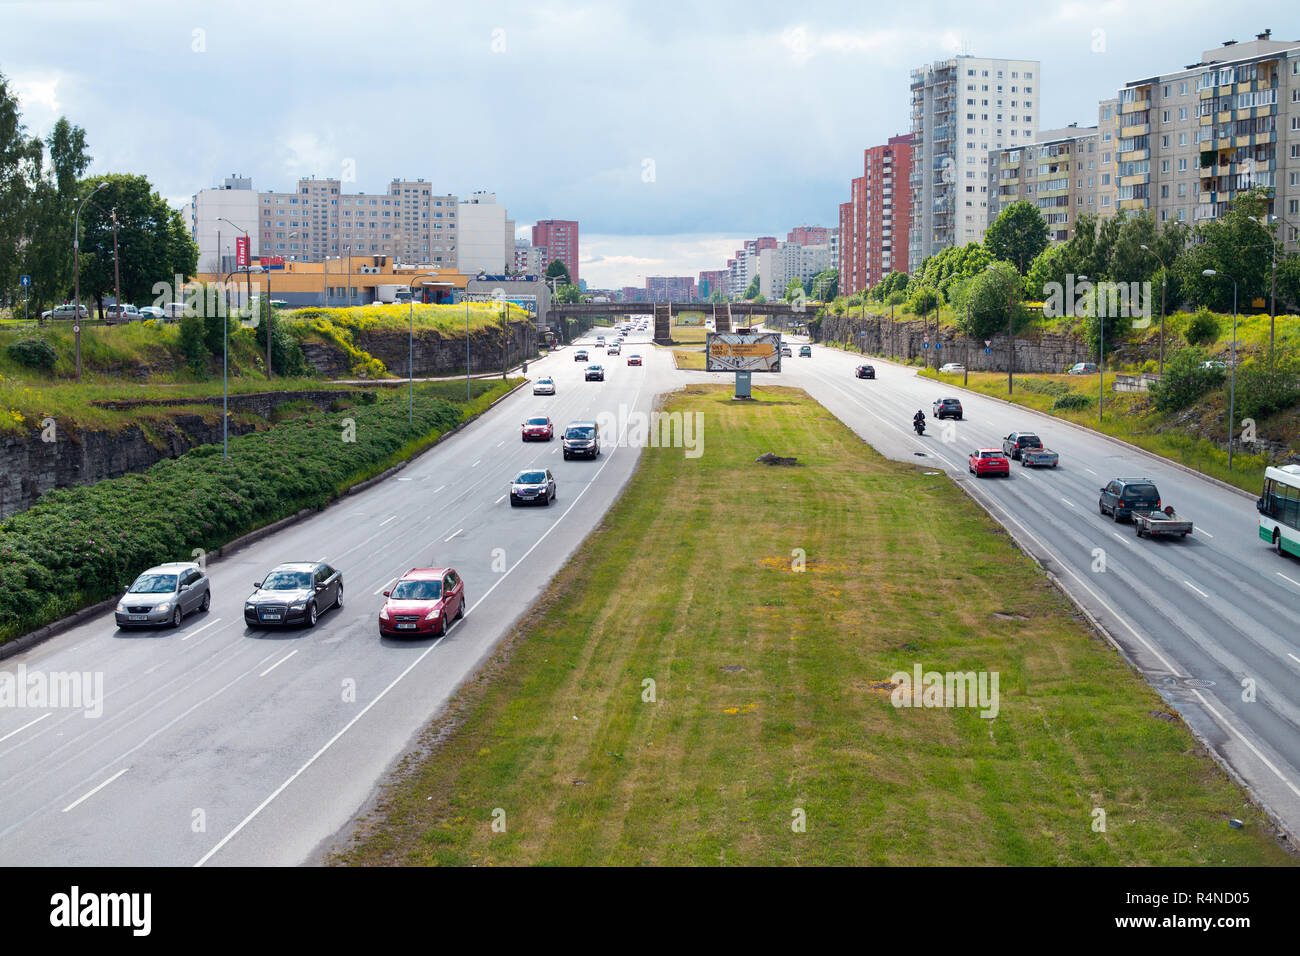 Tallinn, Estonia - June 19, 2015: Traffic in the City, east of Tallinn Stock Photo